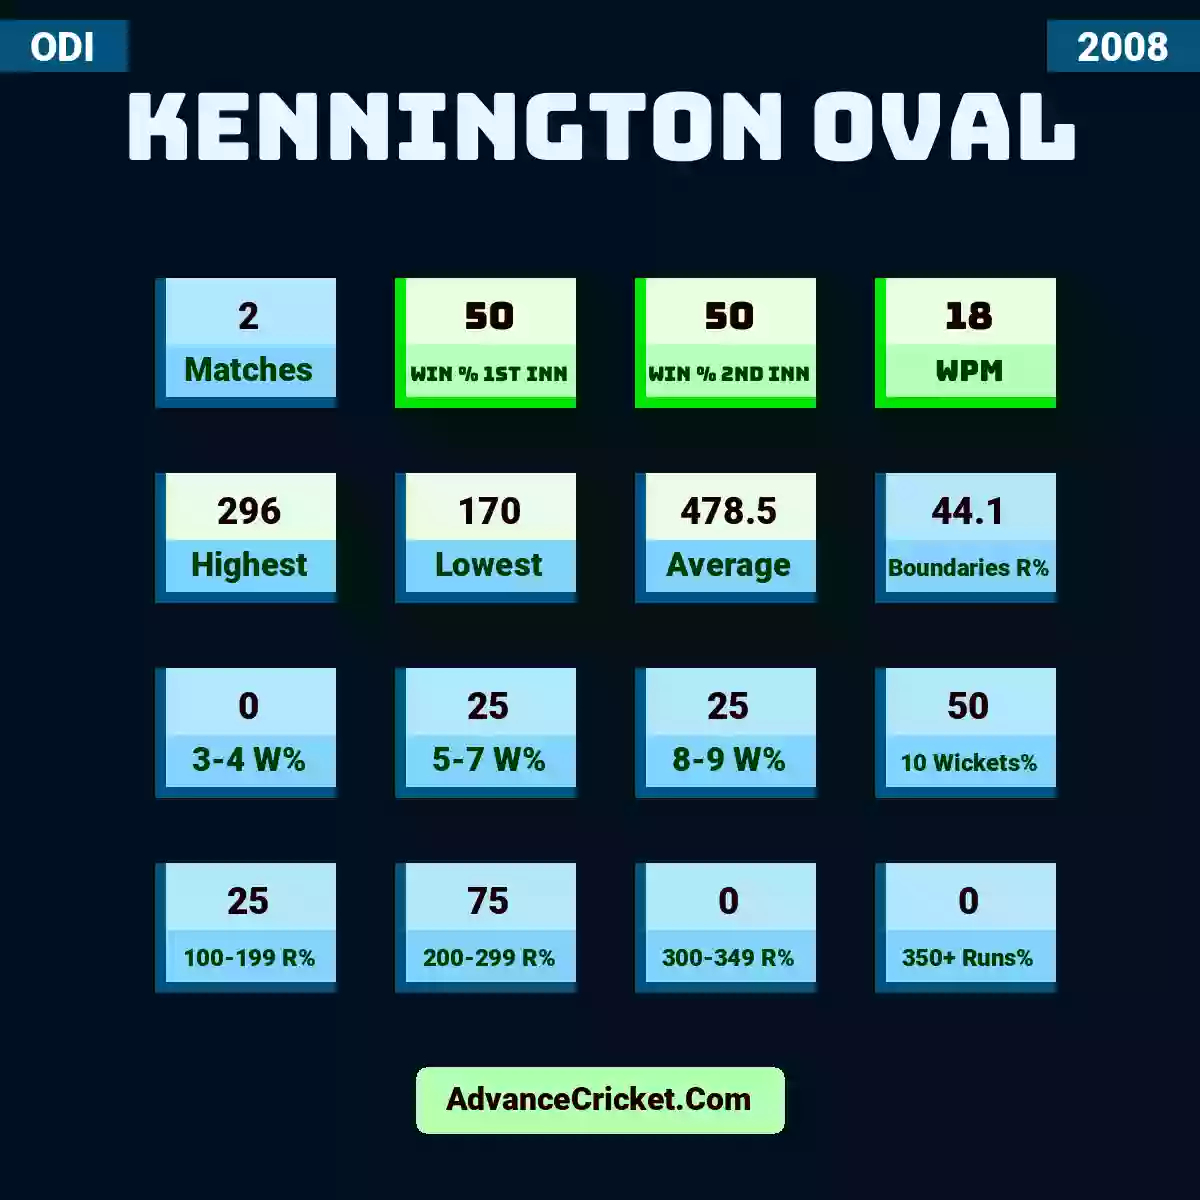 Image showing Kennington Oval with Matches: 2, Win % 1st Inn: 50, Win % 2nd Inn: 50, WPM: 18, Highest: 296, Lowest: 170, Average: 478.5, Boundaries R%: 44.1, 3-4 W%: 0, 5-7 W%: 25, 8-9 W%: 25, 10 Wickets%: 50, 100-199 R%: 25, 200-299 R%: 75, 300-349 R%: 0, 350+ Runs%: 0.